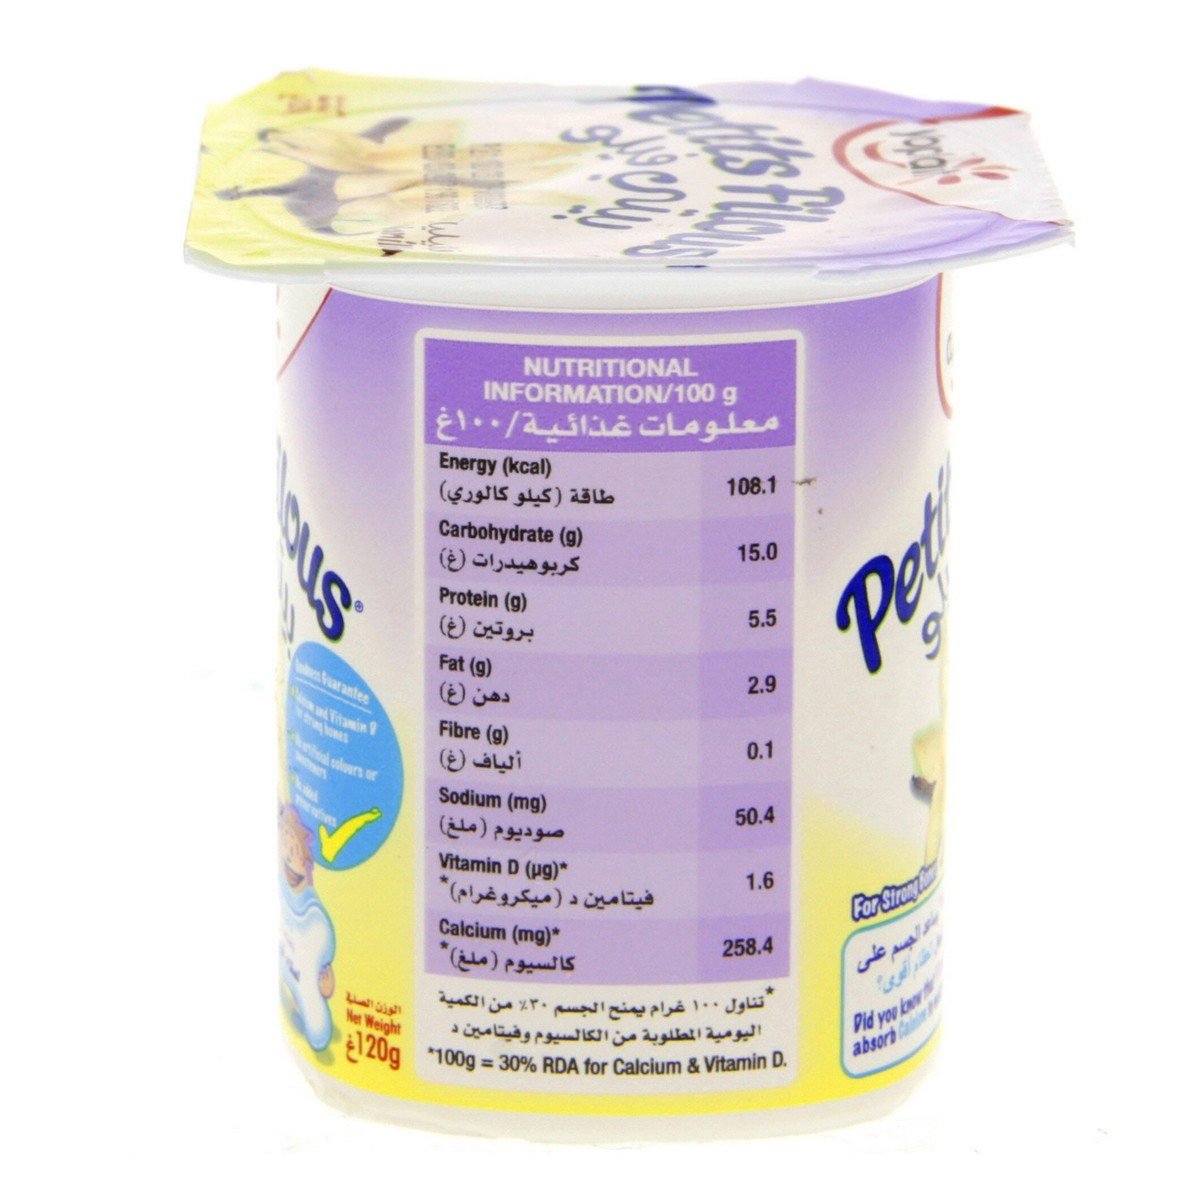 Yoplait Petits Filous Vanilla Flavoured Yogurt 120 g